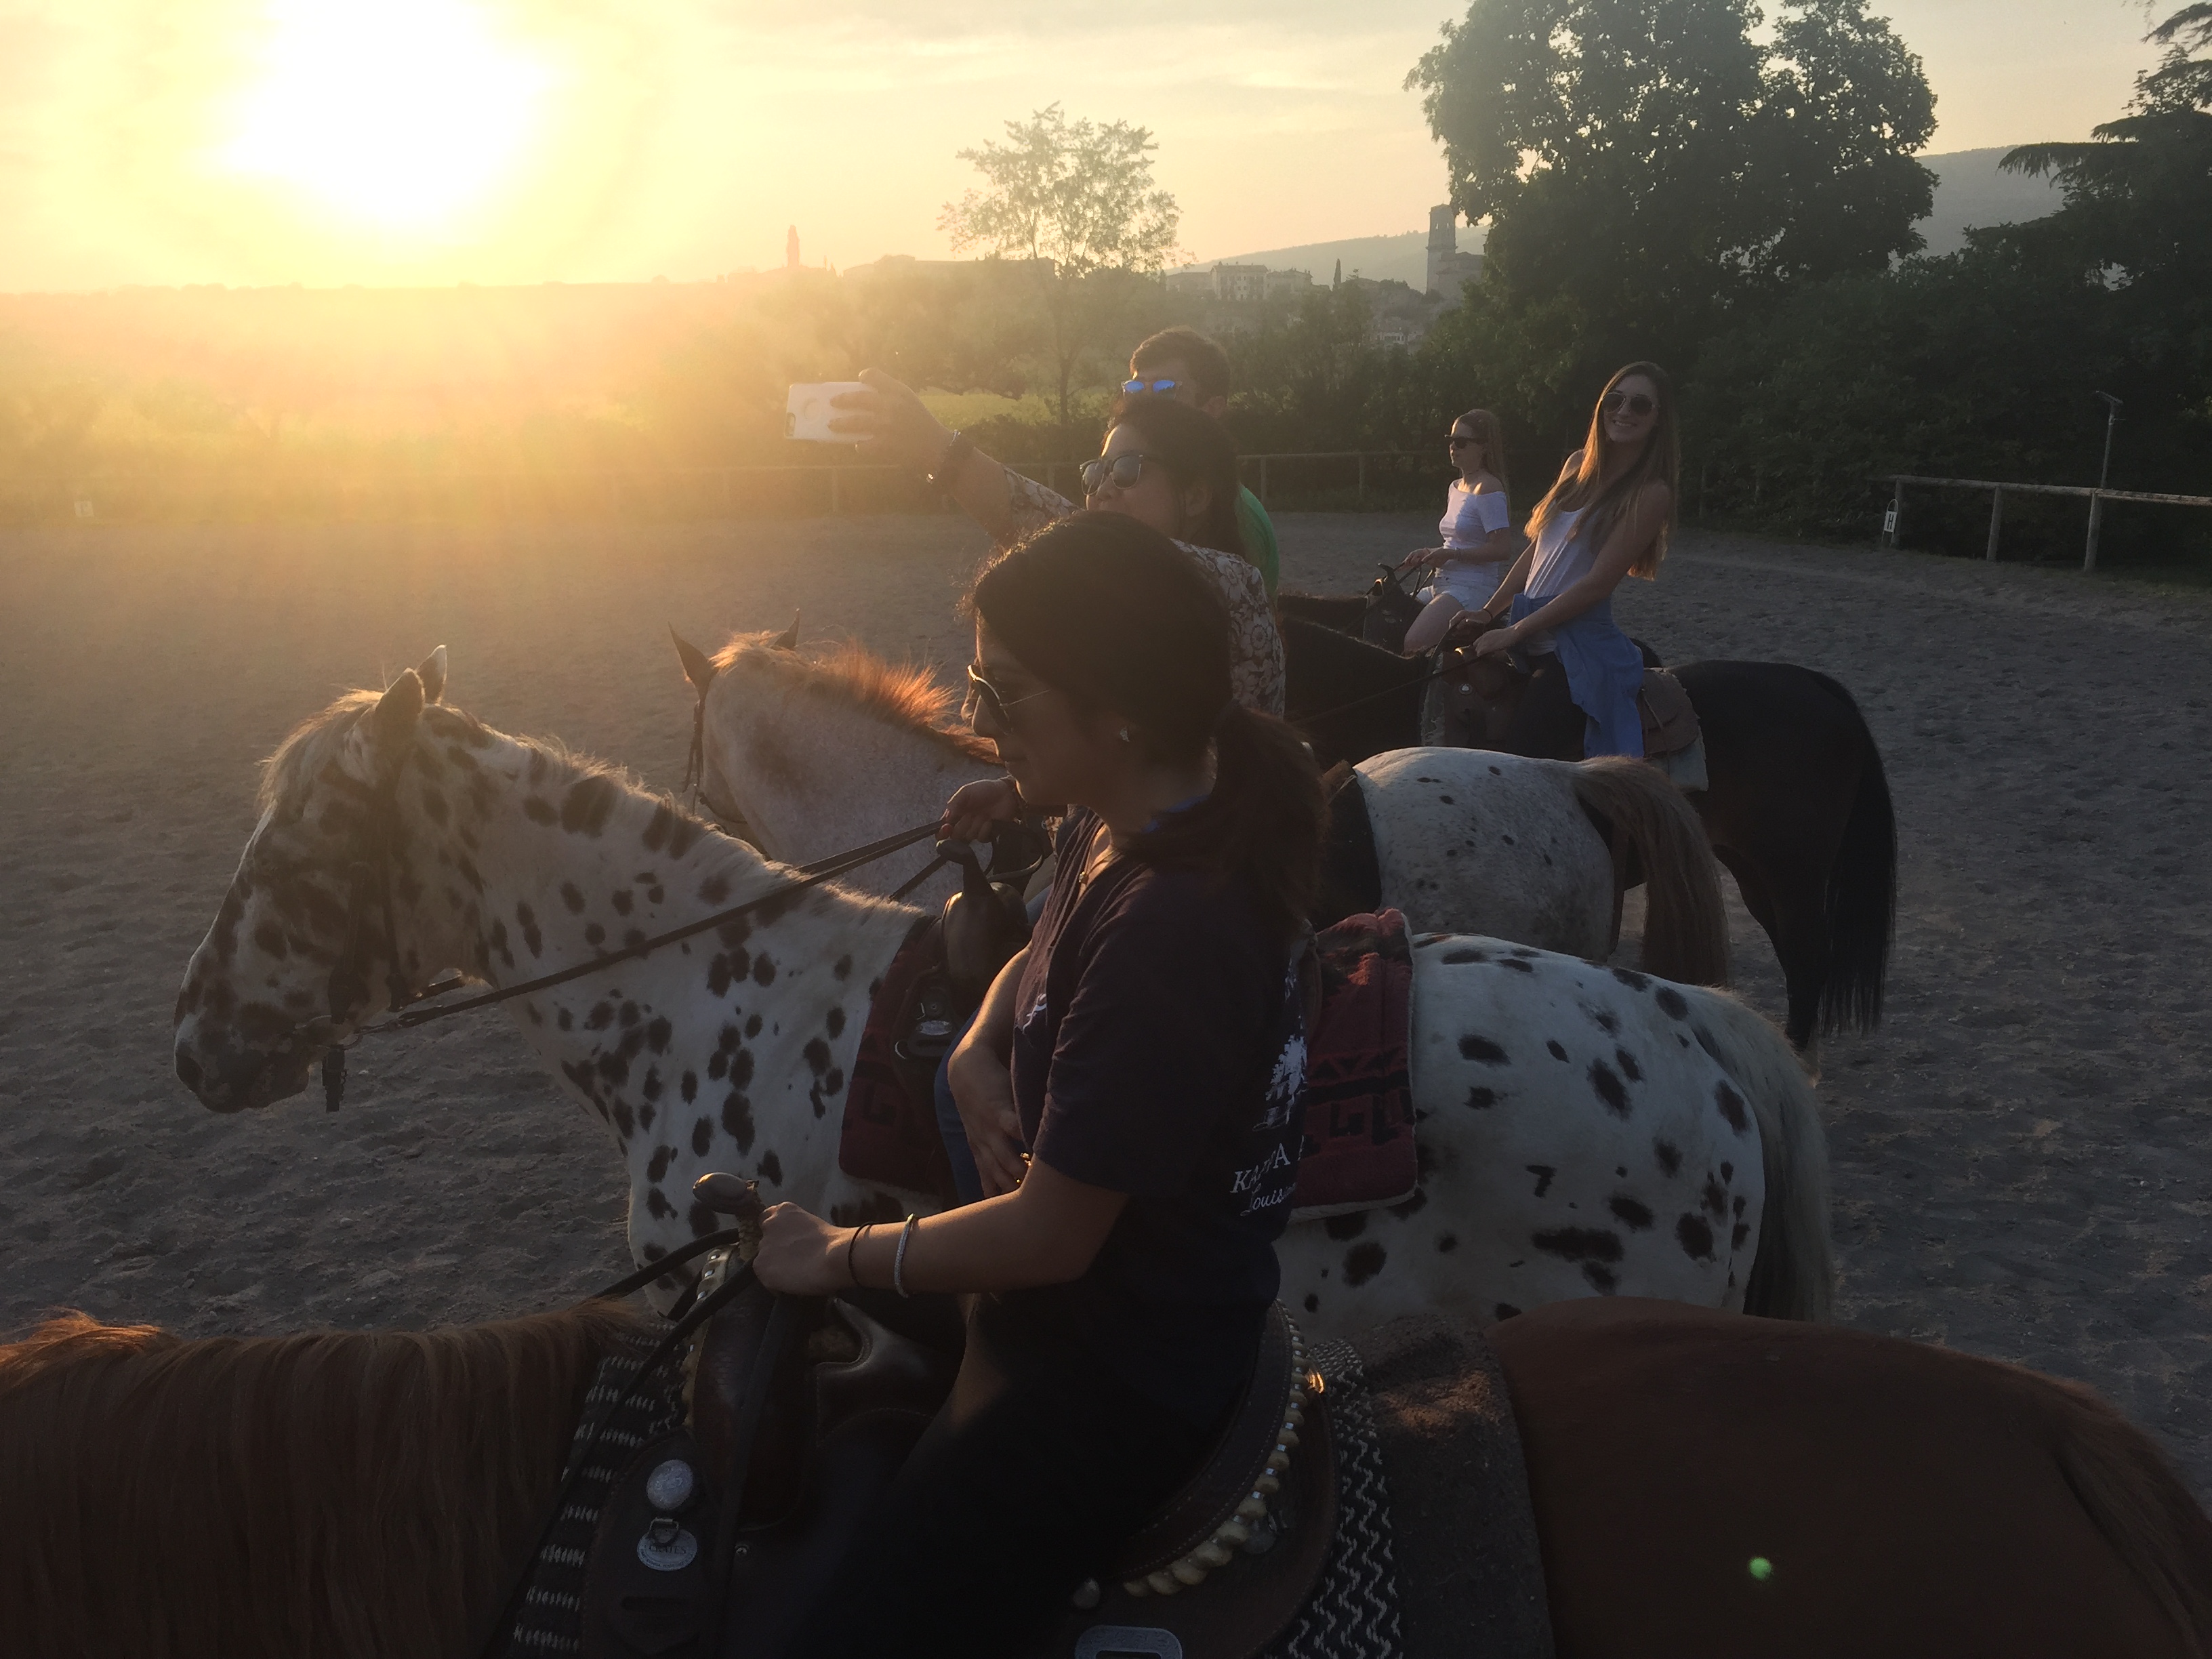 horseback riding at dusk